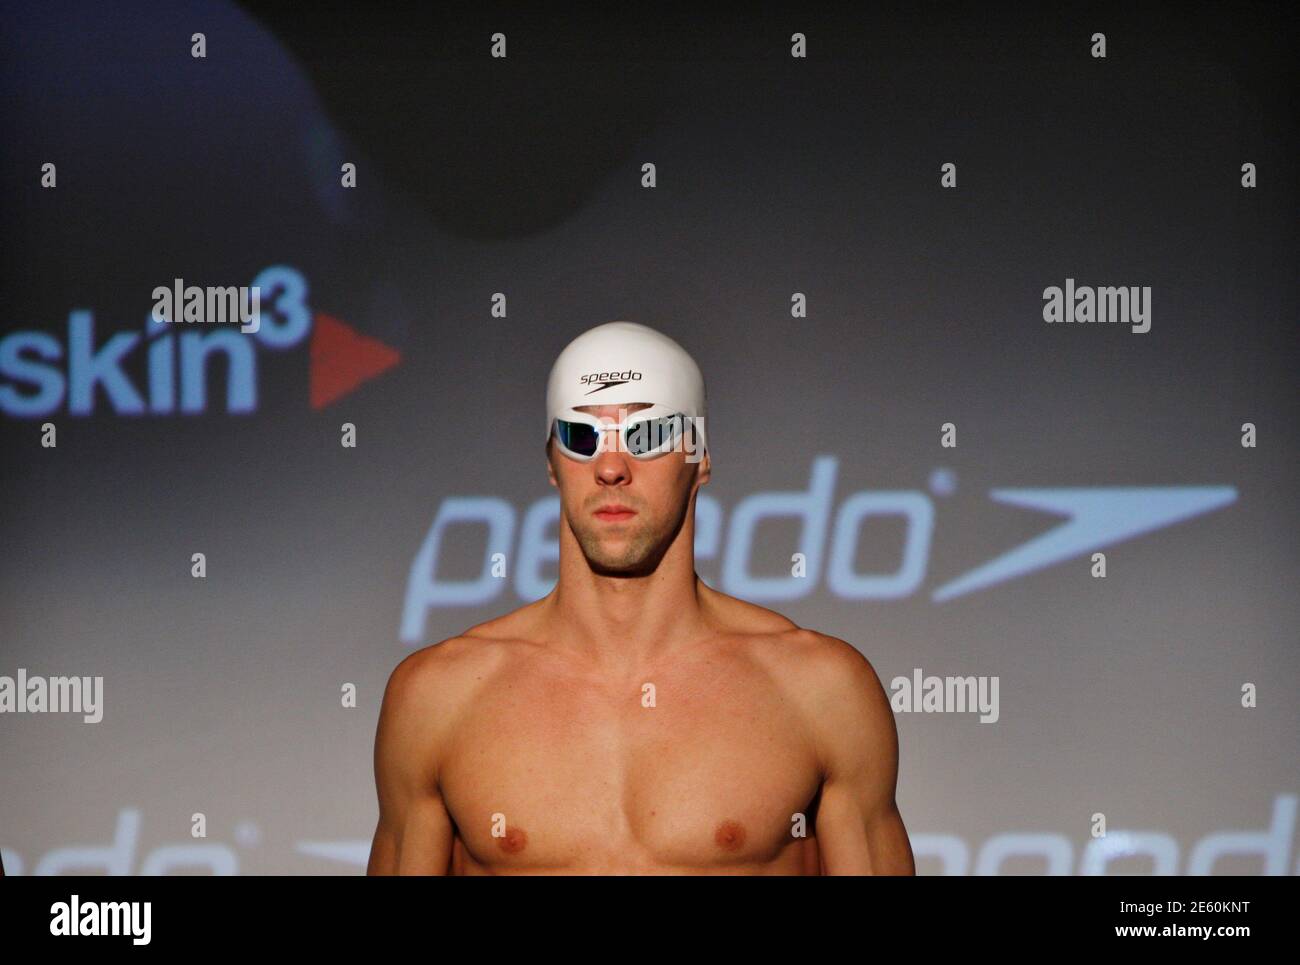 U.S. Olympic gold medallist swimmer Michael Phelps models the new Speedo  brand swimsuits "Speedo FASTSKIN3" at